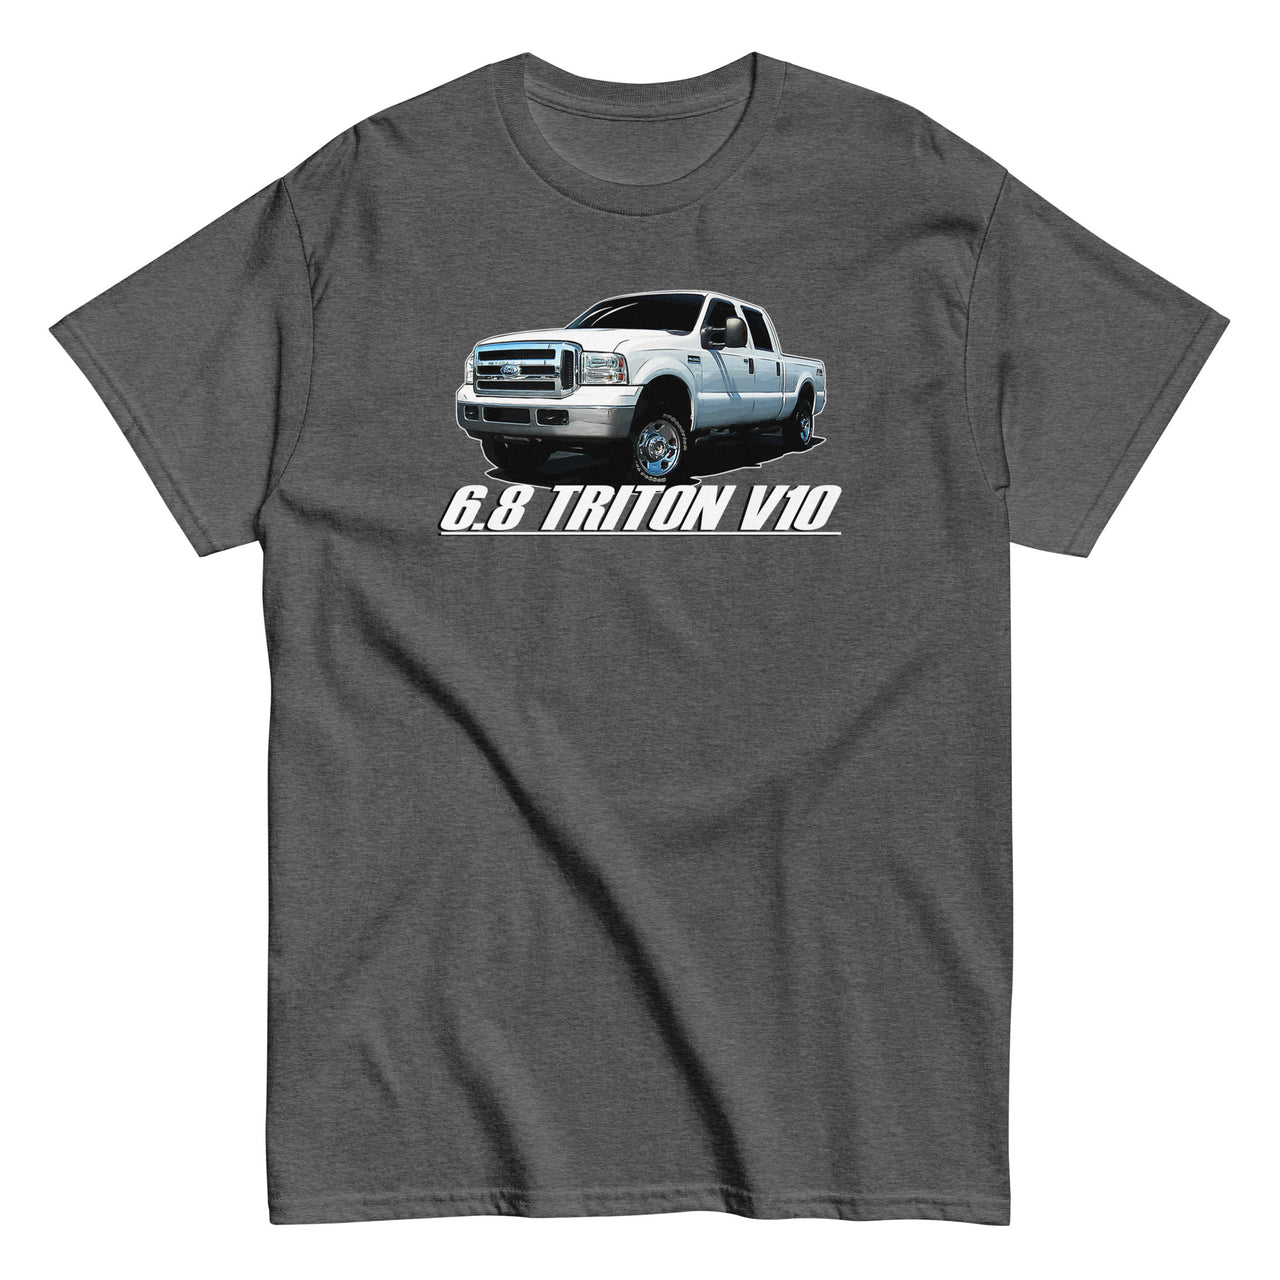 6.8 Triton V10 F250 Crew Cab T-Shirt in grey